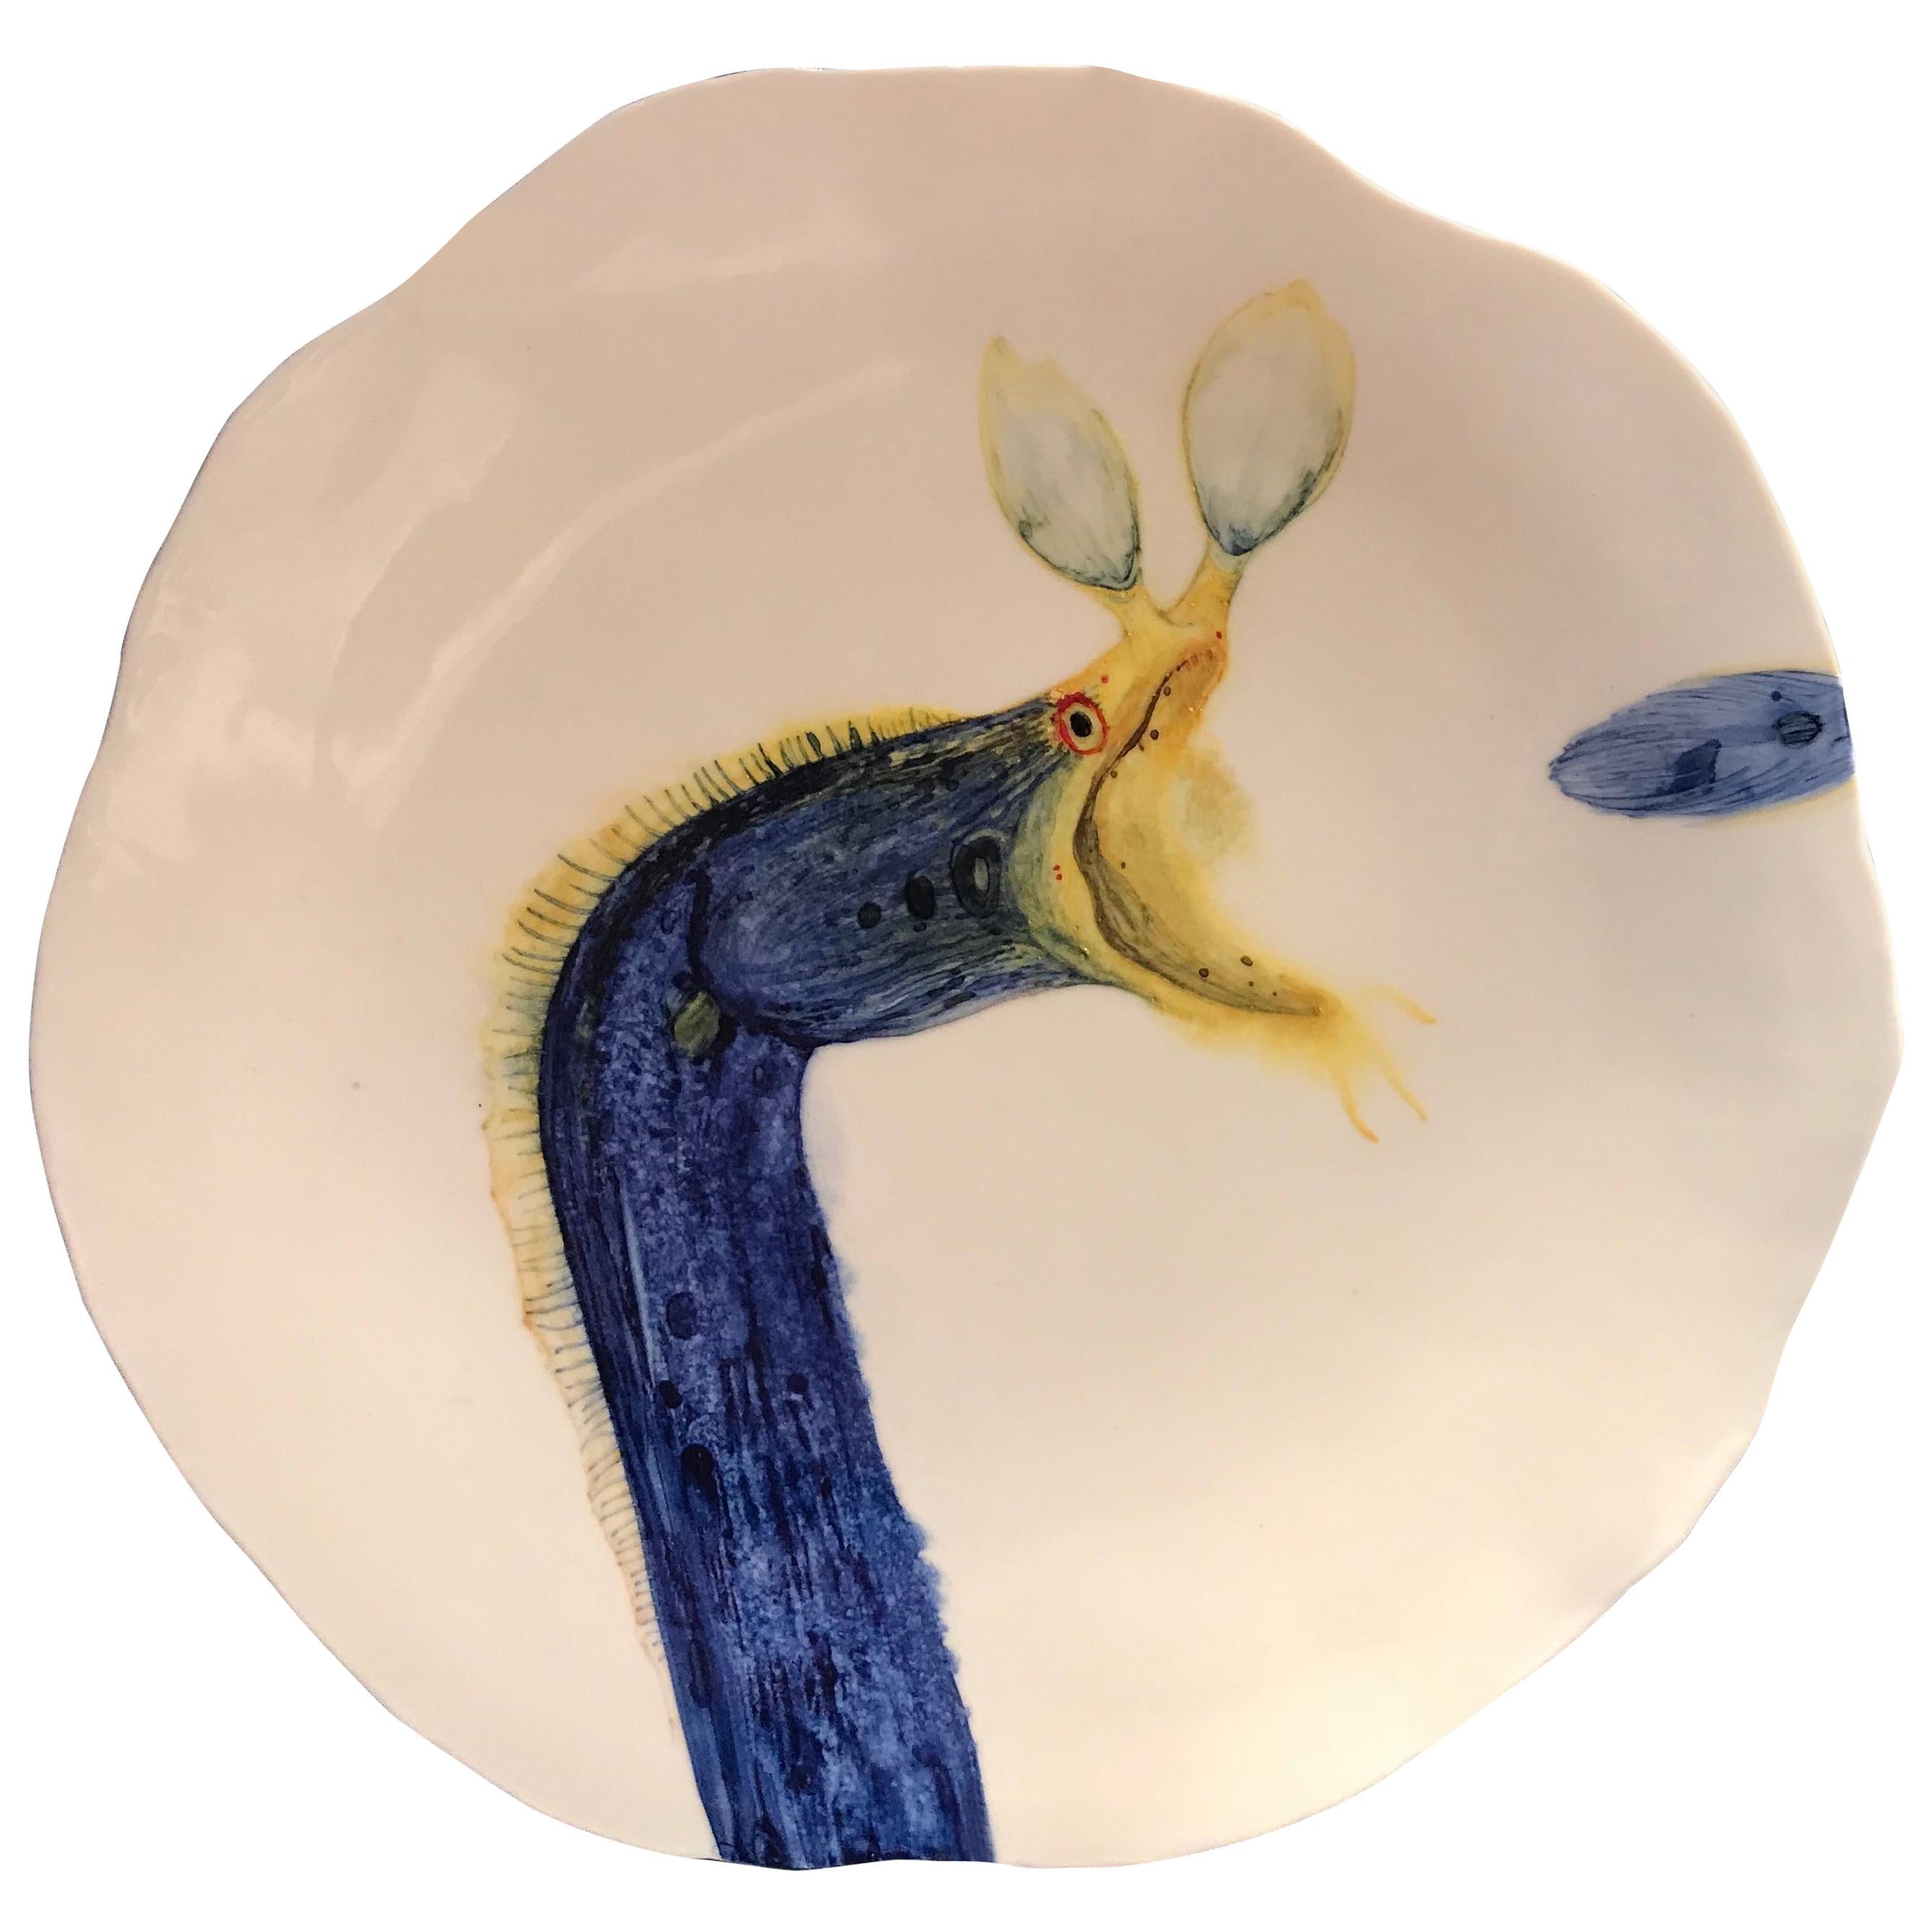 Xue Sun 2018, Unique Enameled Ceramic Wall Platter